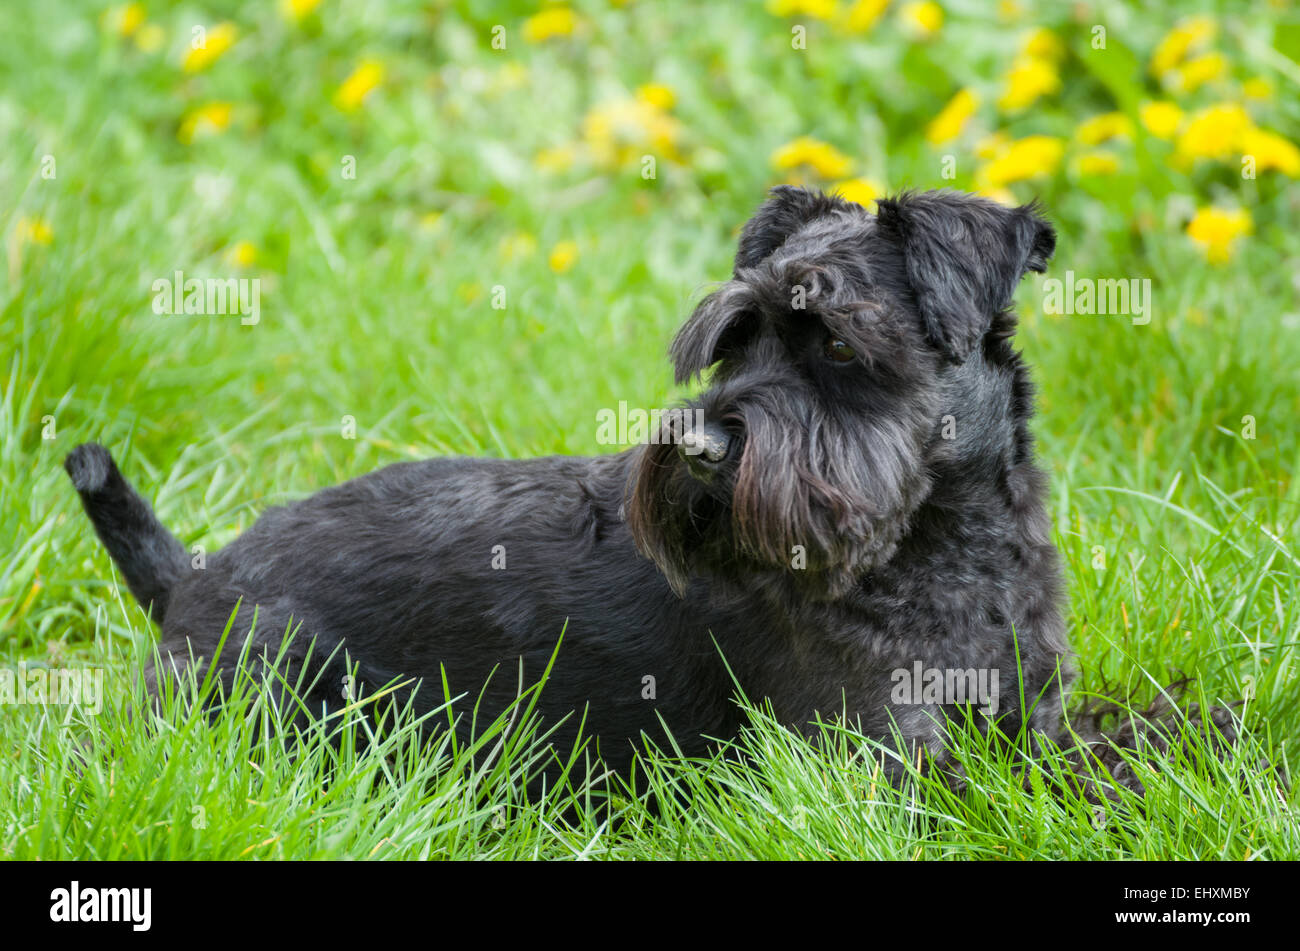 Black Miniature Schnauzer Dog Laying on Grass with Dandelions Stock Photo